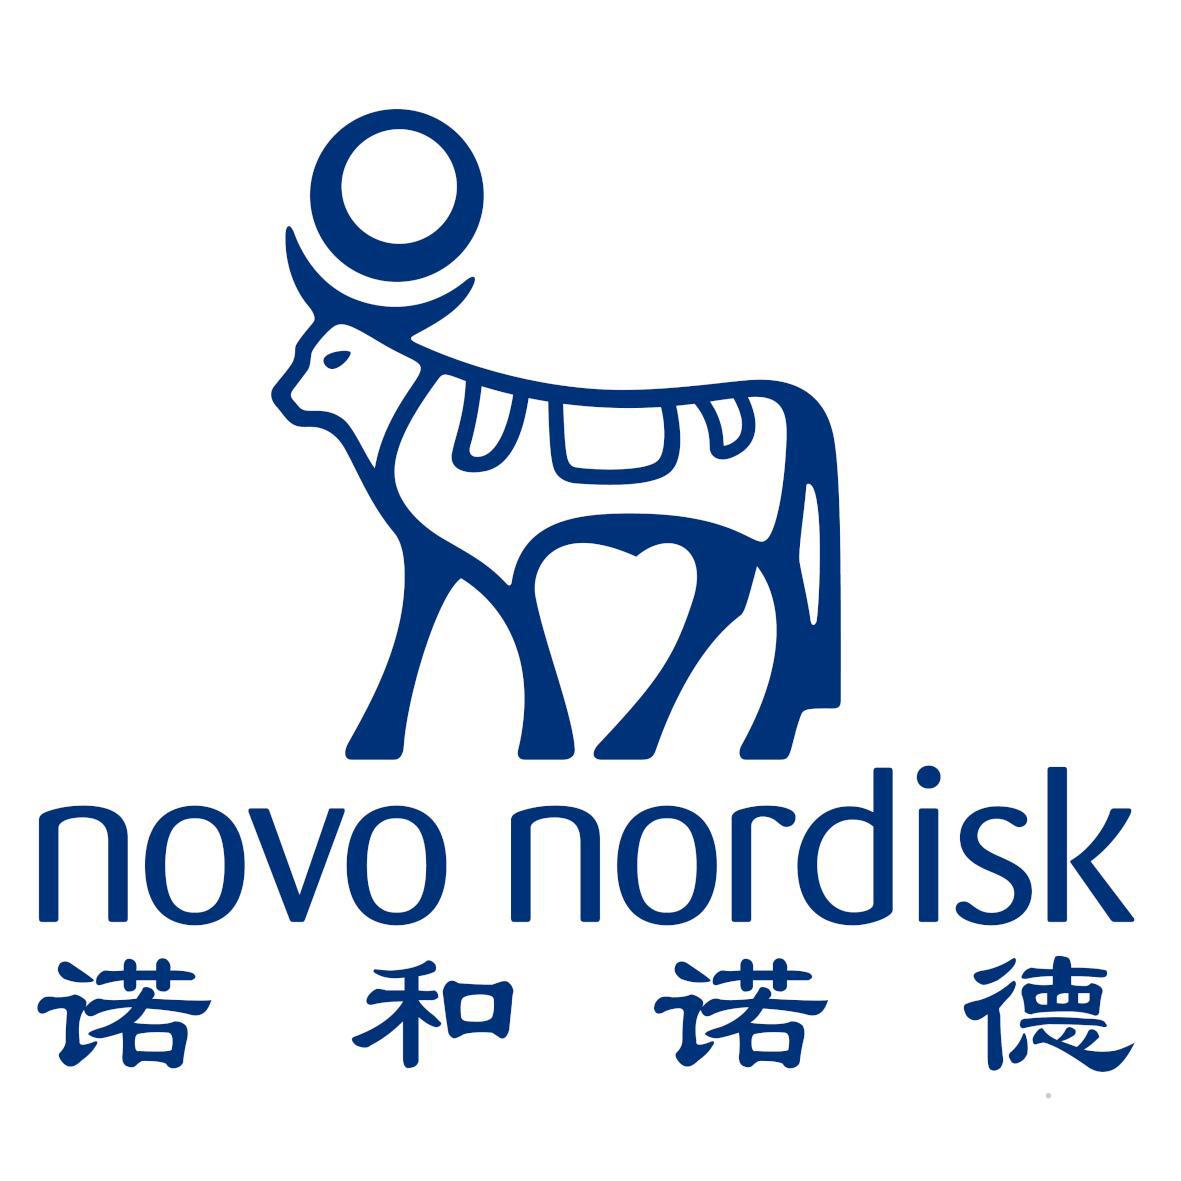 NOVO NORDISK 诺和诺德logo